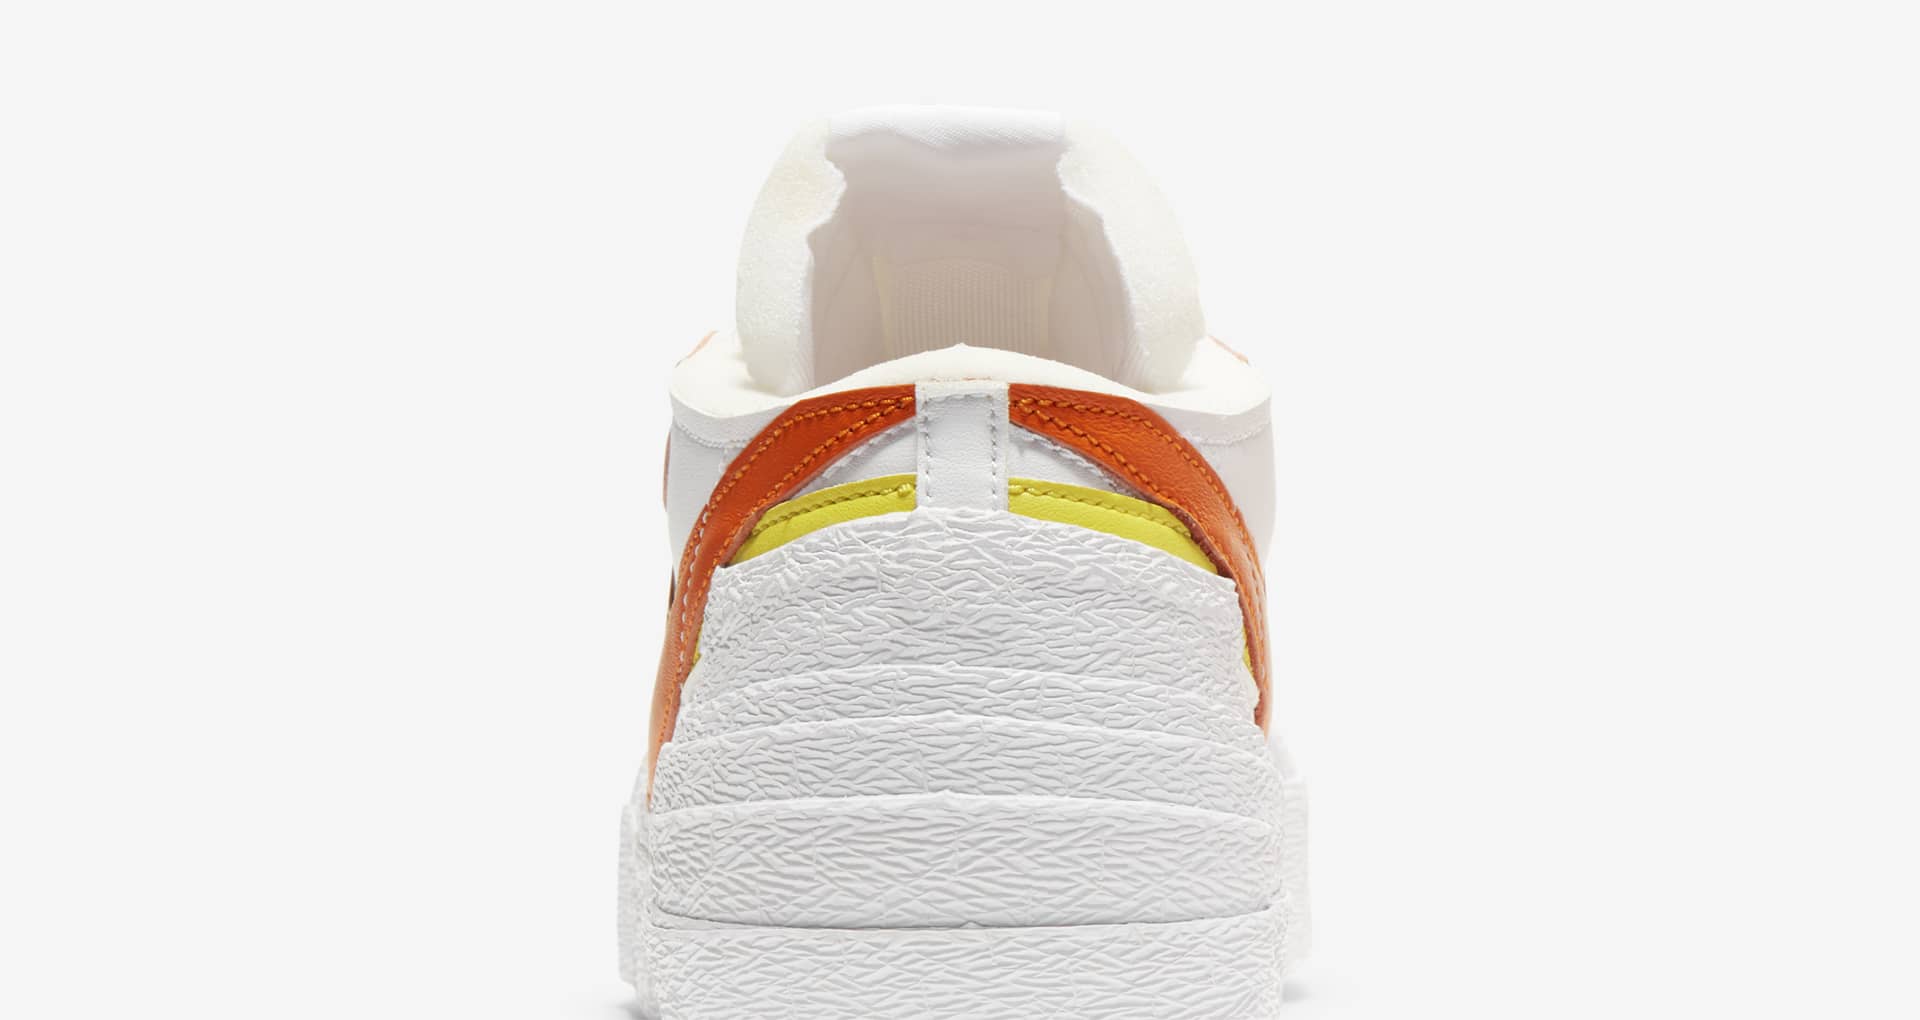 Blazer Low x sacai 'Magma Orange' Release Date. Nike SNKRS GB